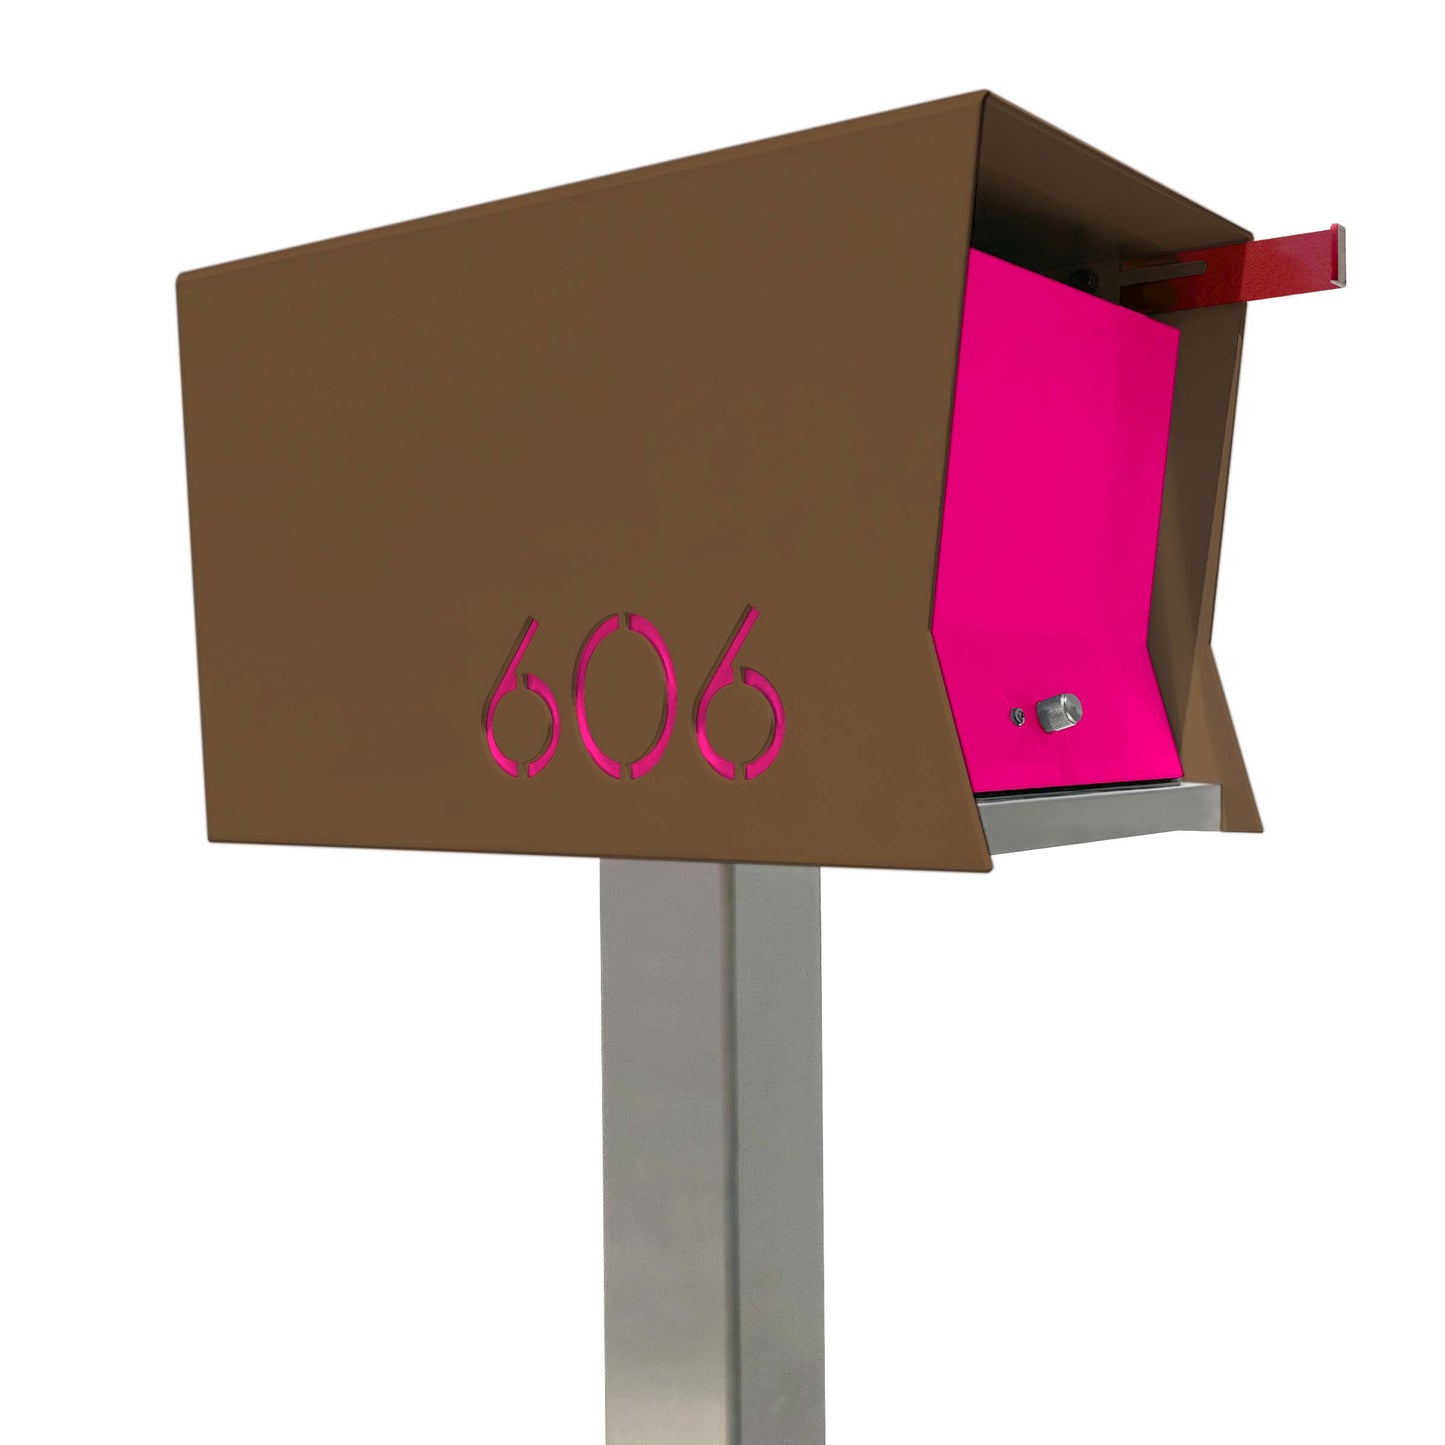 The Original Retrobox in COCONUT - Modern Mailbox brown and pink